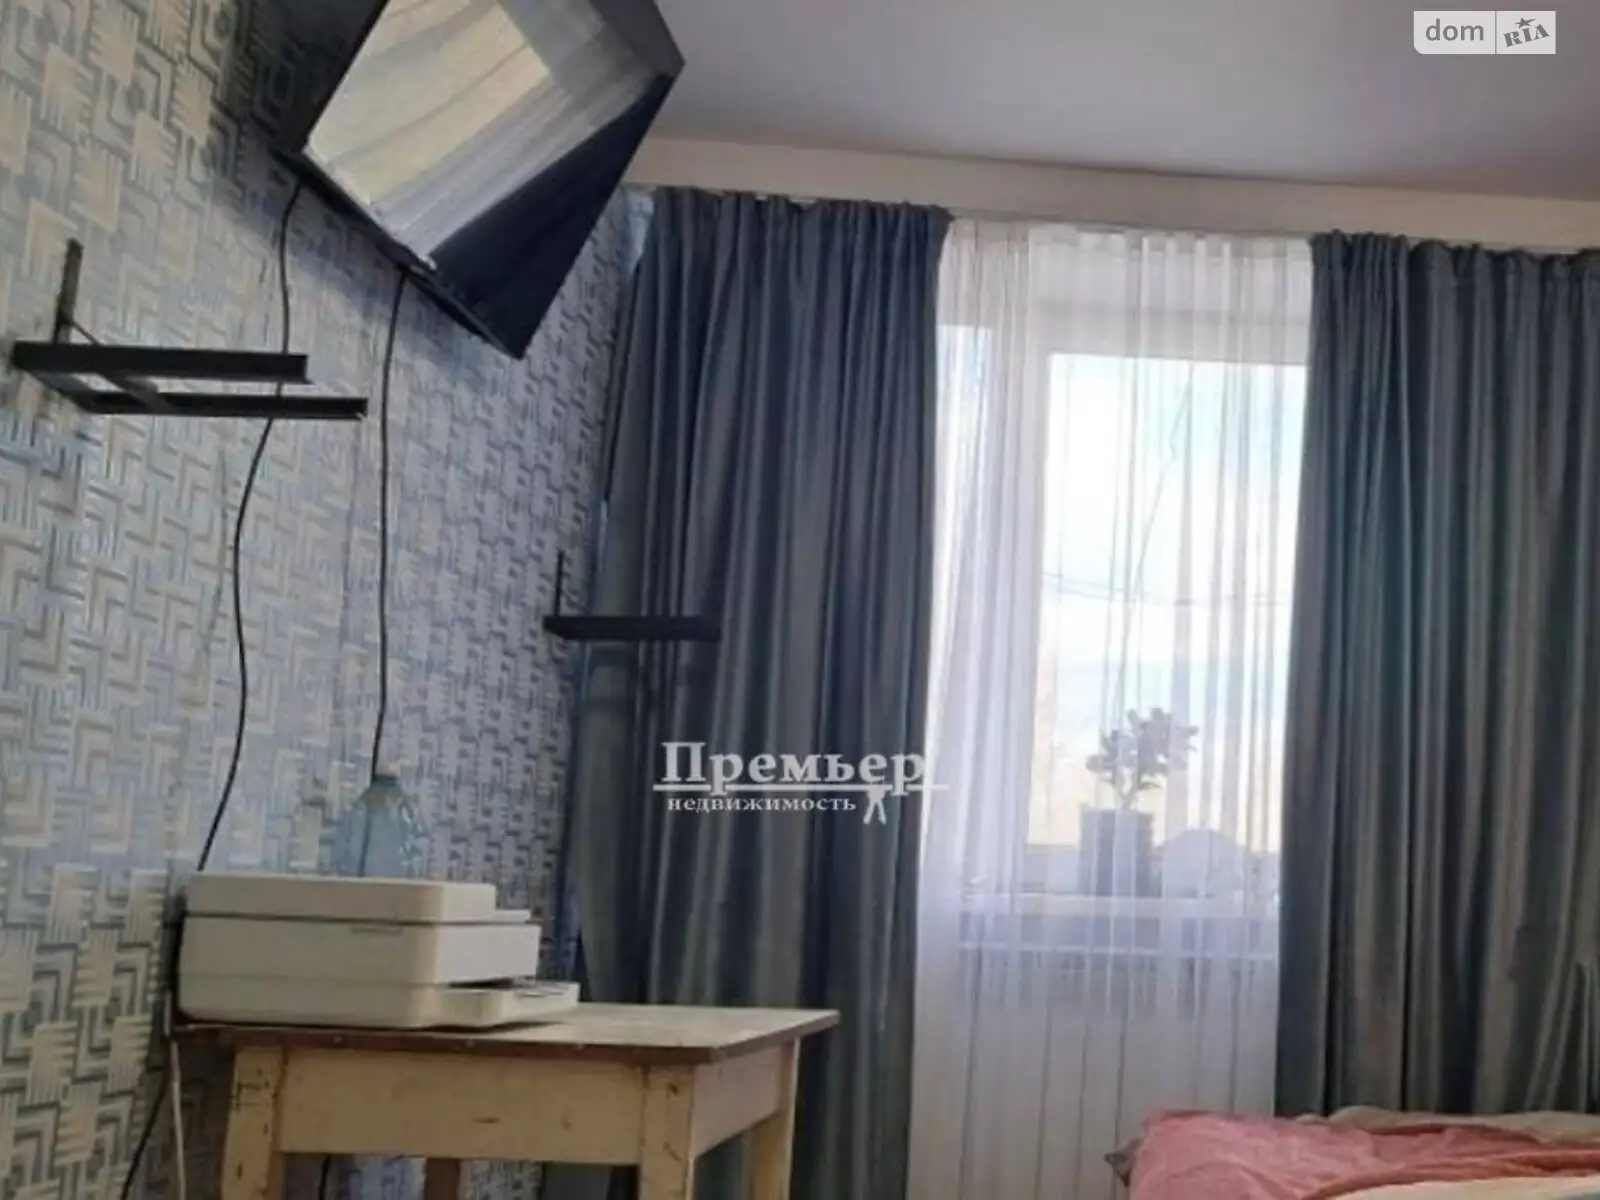 Продается комната 18 кв. м в Одессе, цена: 10000 $ - фото 1